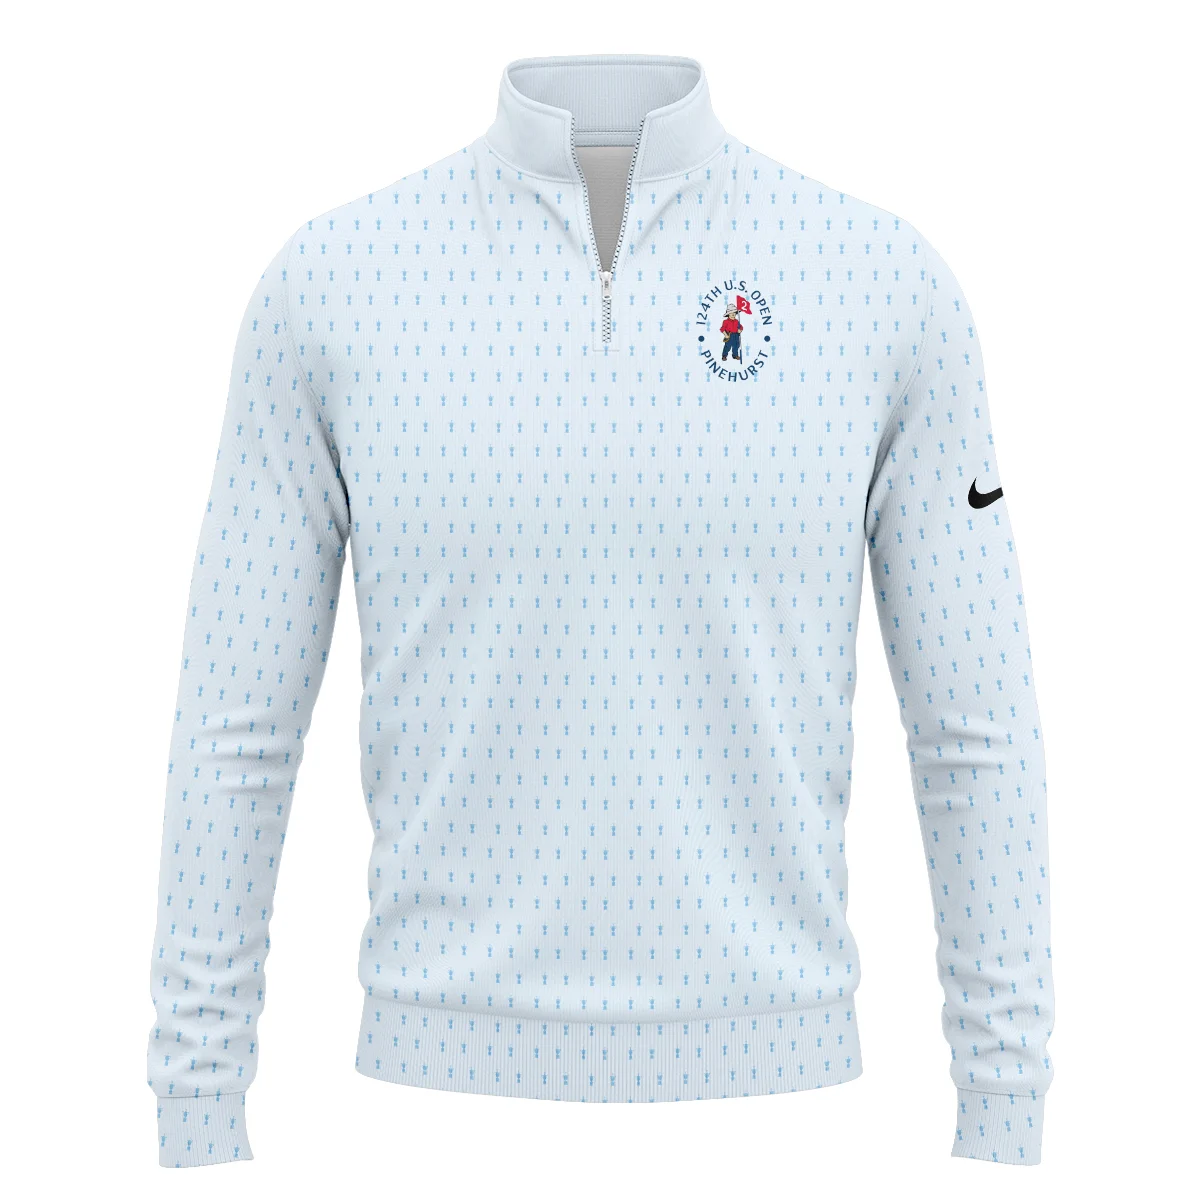 Golf Pattern Cup Light Blue Green 124th U.S. Open Pinehurst Nike Unisex T-Shirt Style Classic T-Shirt